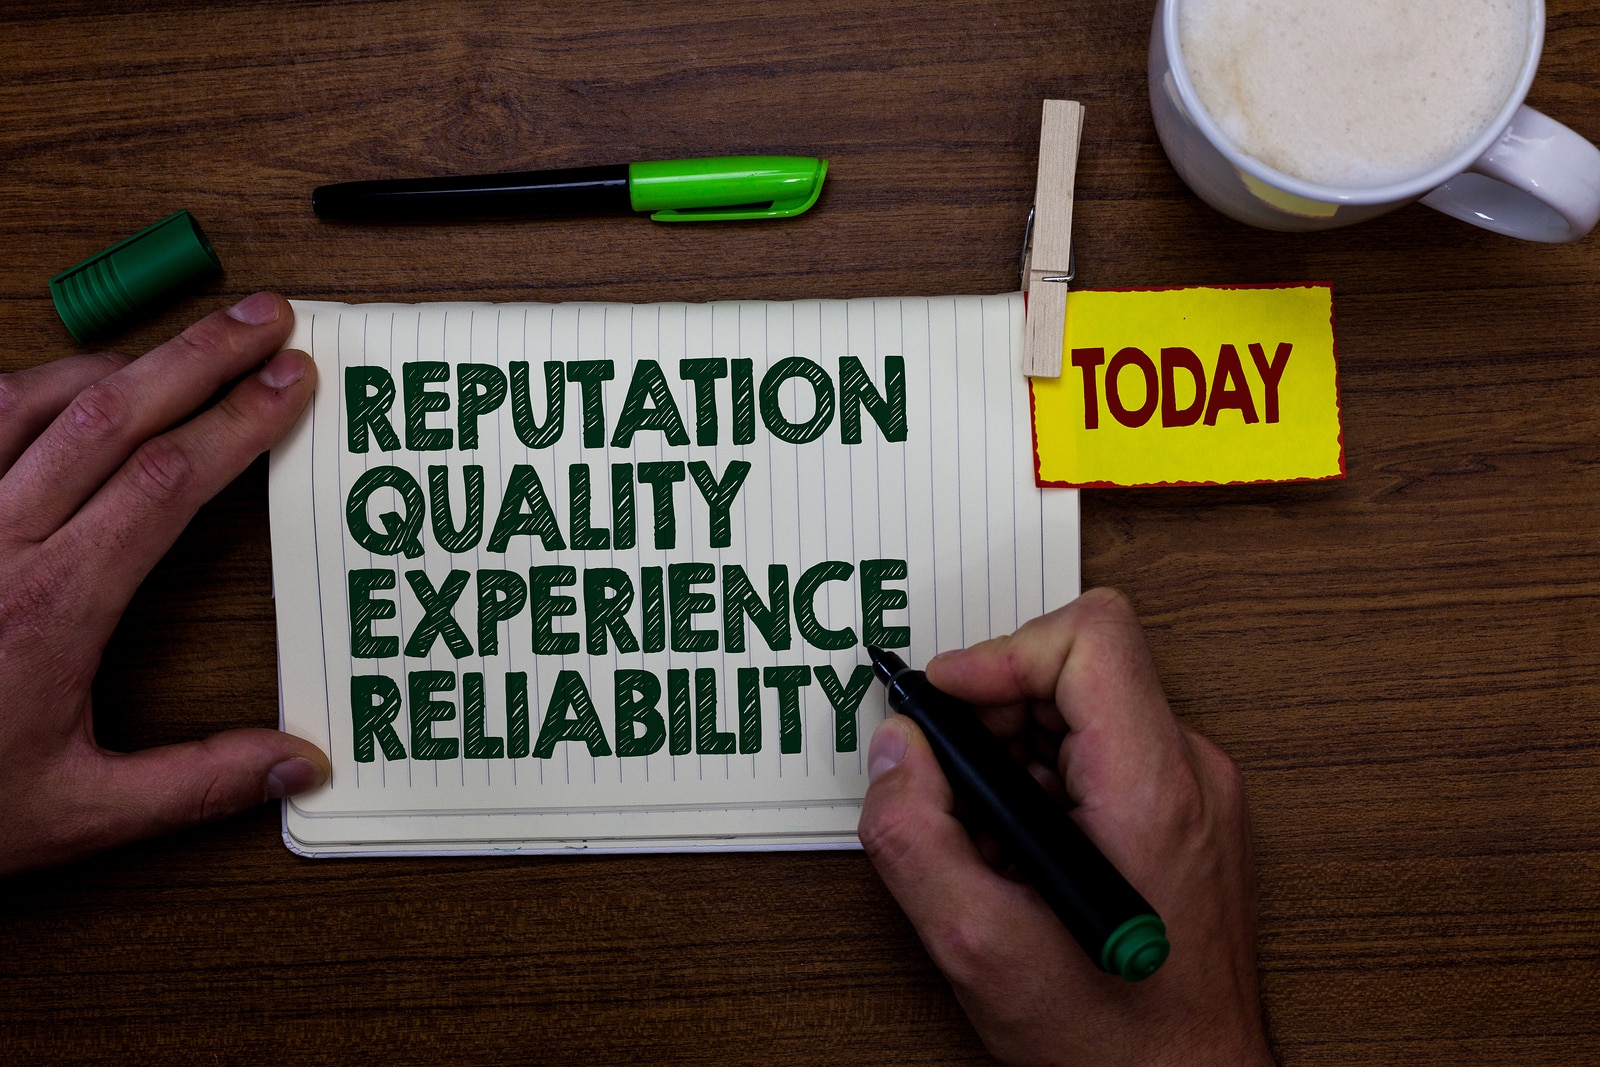 Reputation quality experience reliability